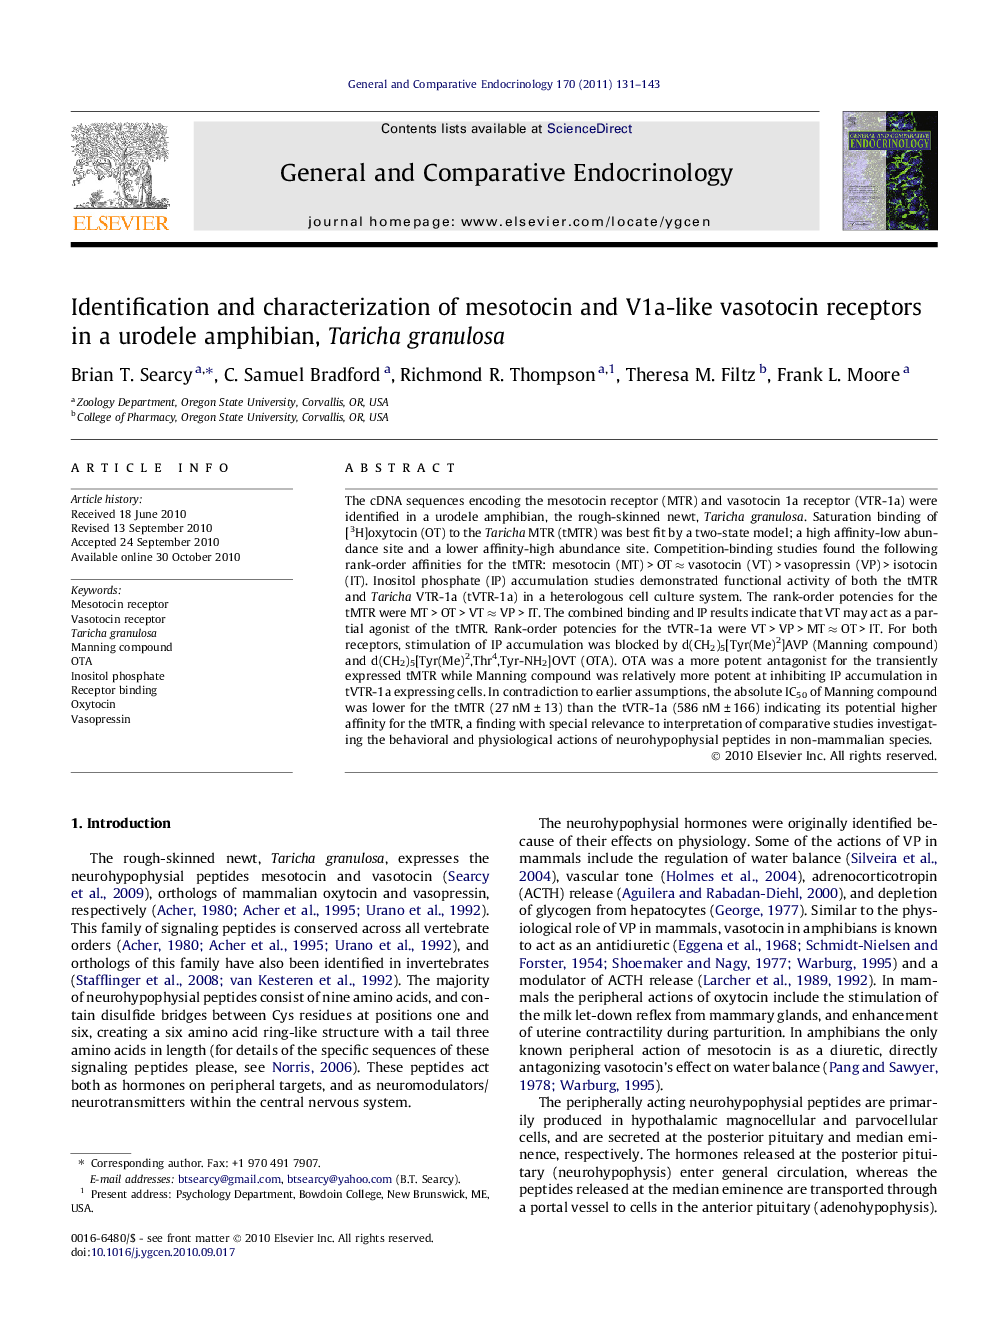 Identification and characterization of mesotocin and V1a-like vasotocin receptors in a urodele amphibian, Taricha granulosa